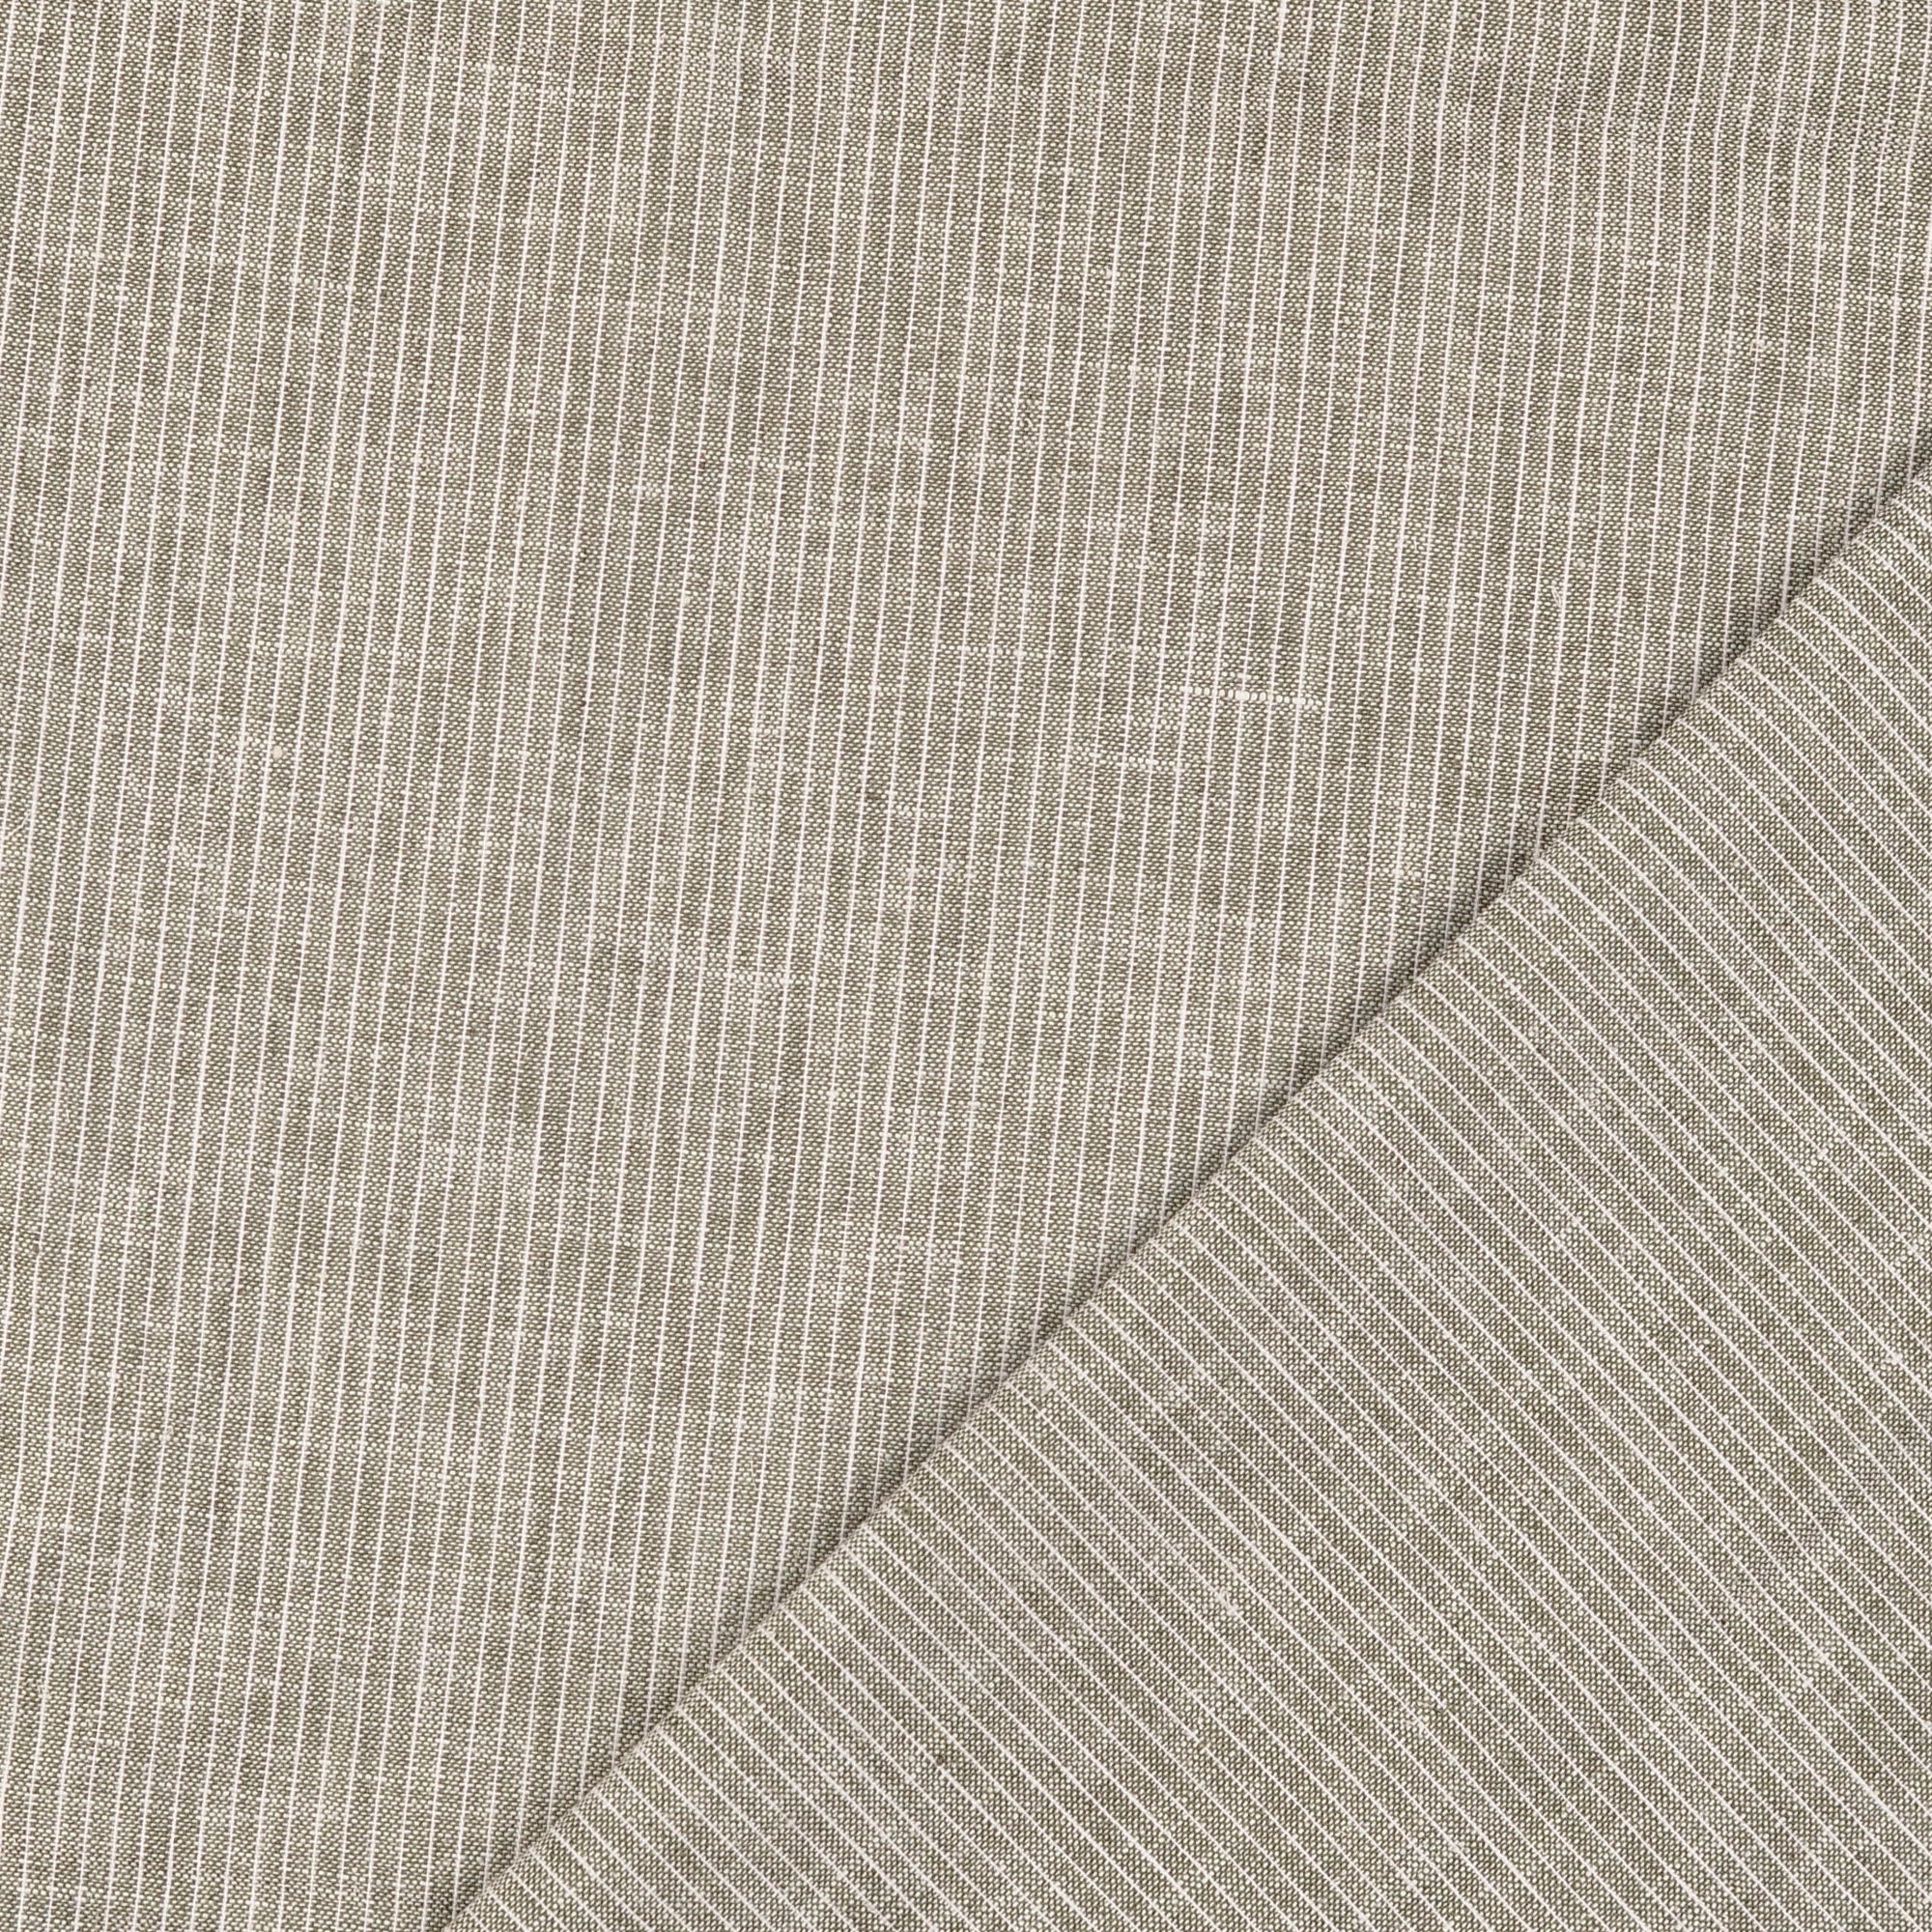 REMNANT 1.33 Metres - Fine Stripe Light Grey Linen Cotton Fabric